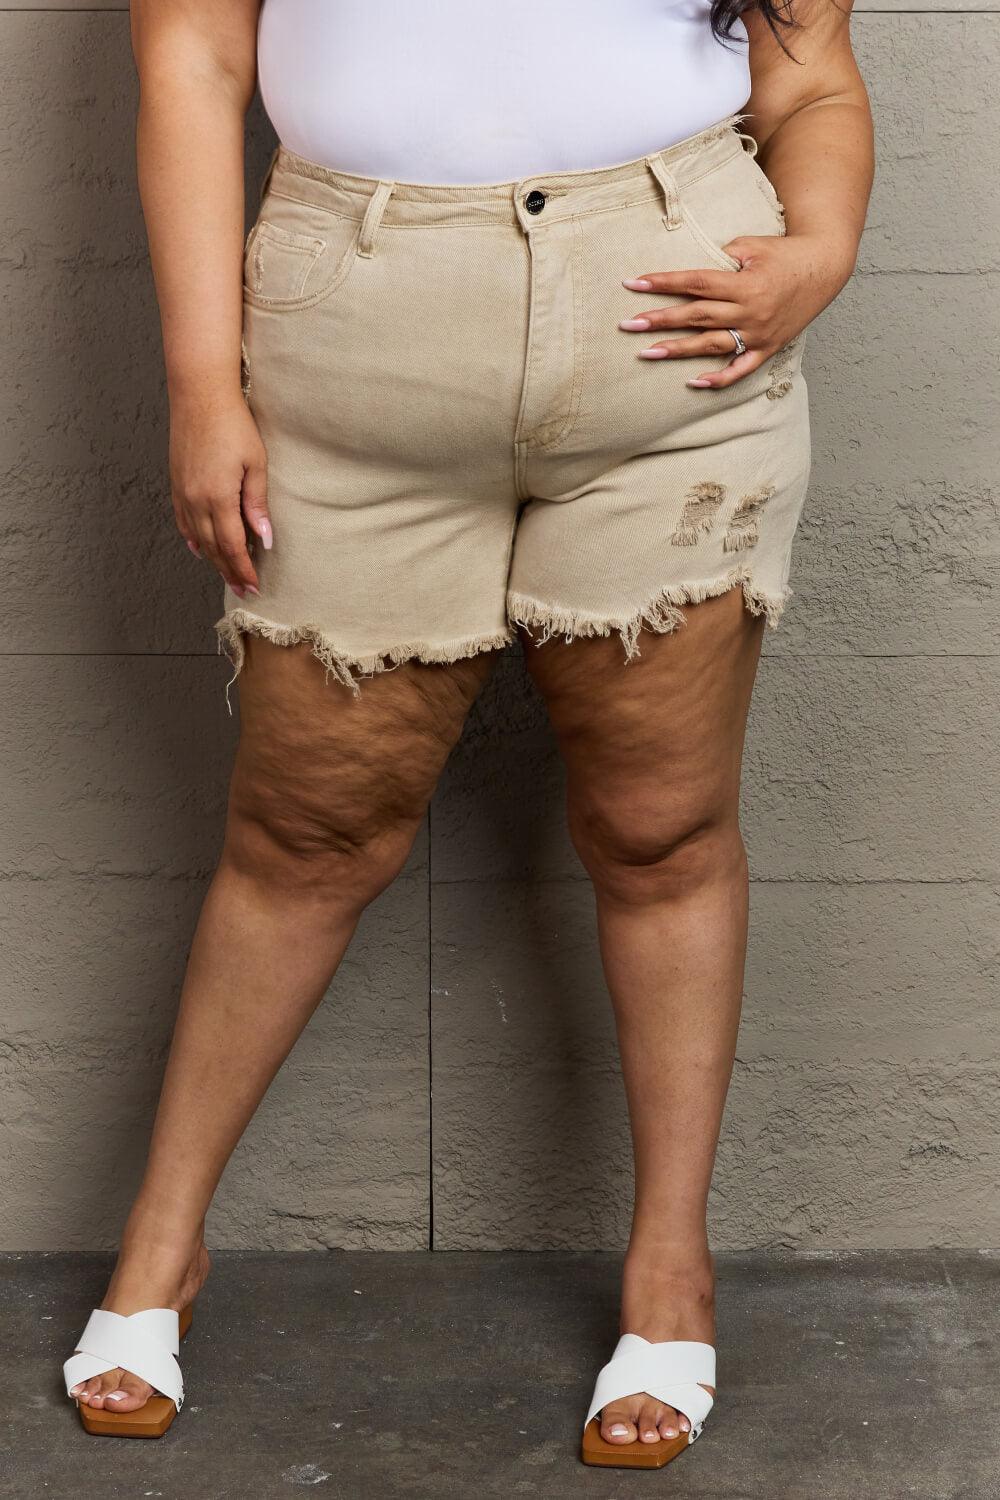 Bona Fide Fashion Full Size High Waisted Distressed Shorts in Sand - Women Fashion - Bona Fide Fashion